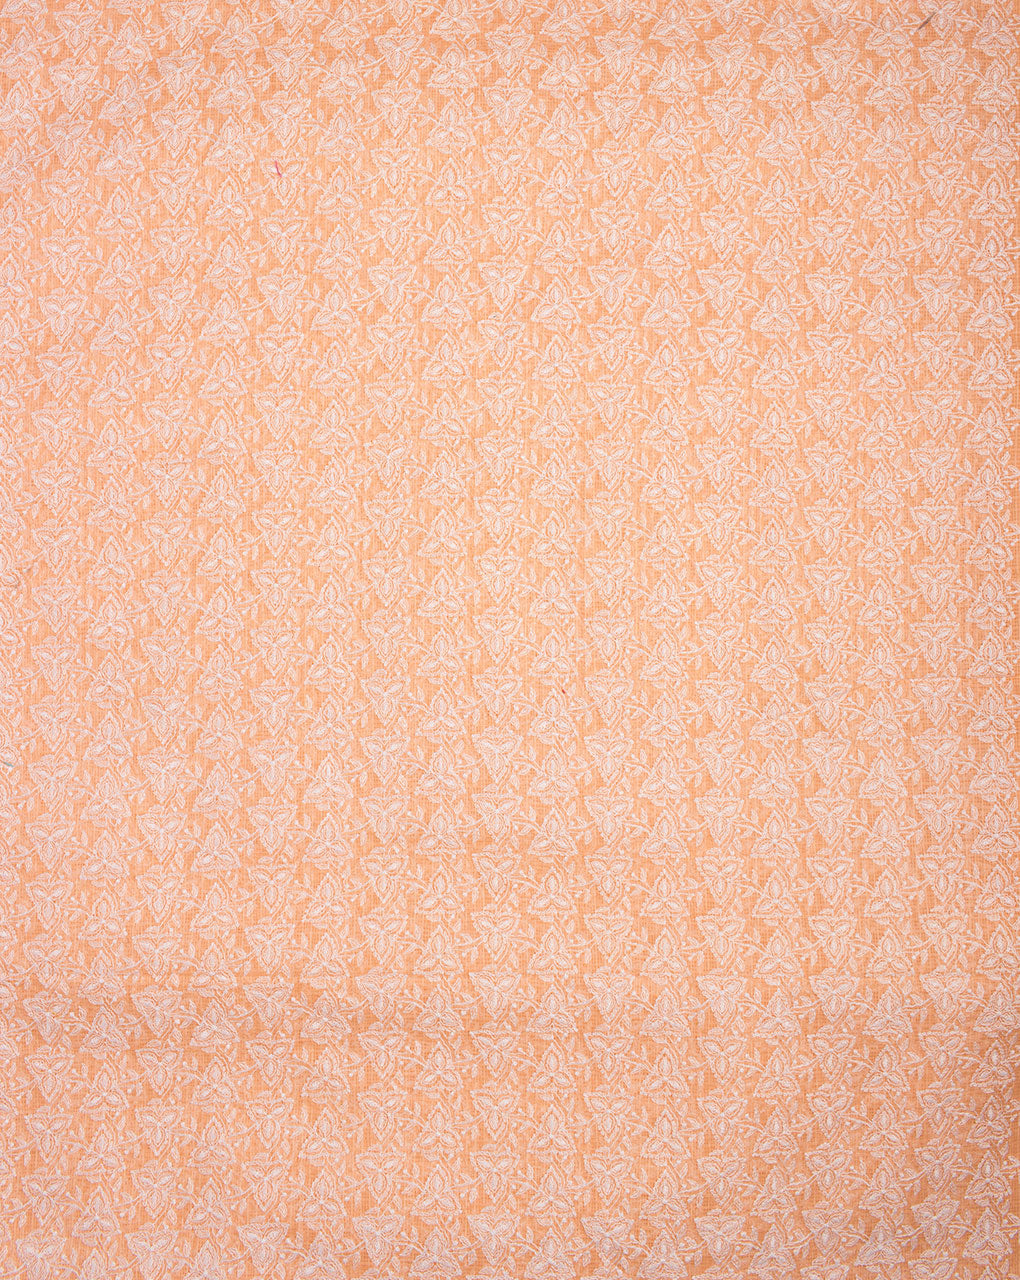 Embroidered Cotton Kota Doria Fabric - Fabriclore.com